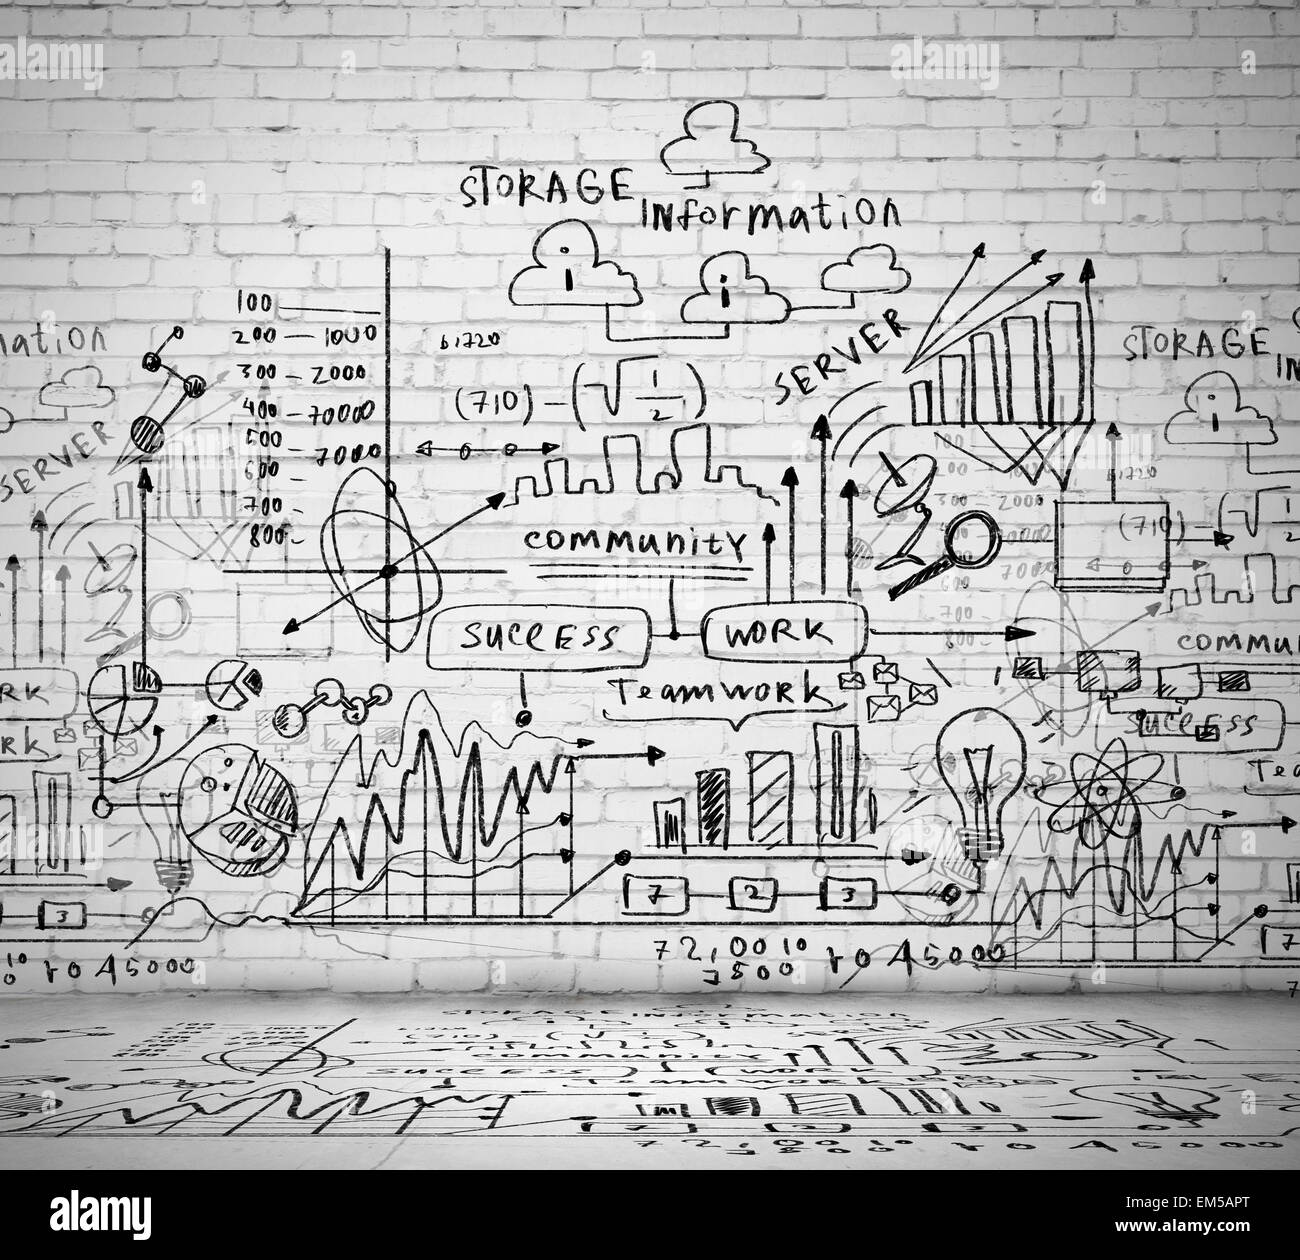 Business ideas sketch Stock Photo